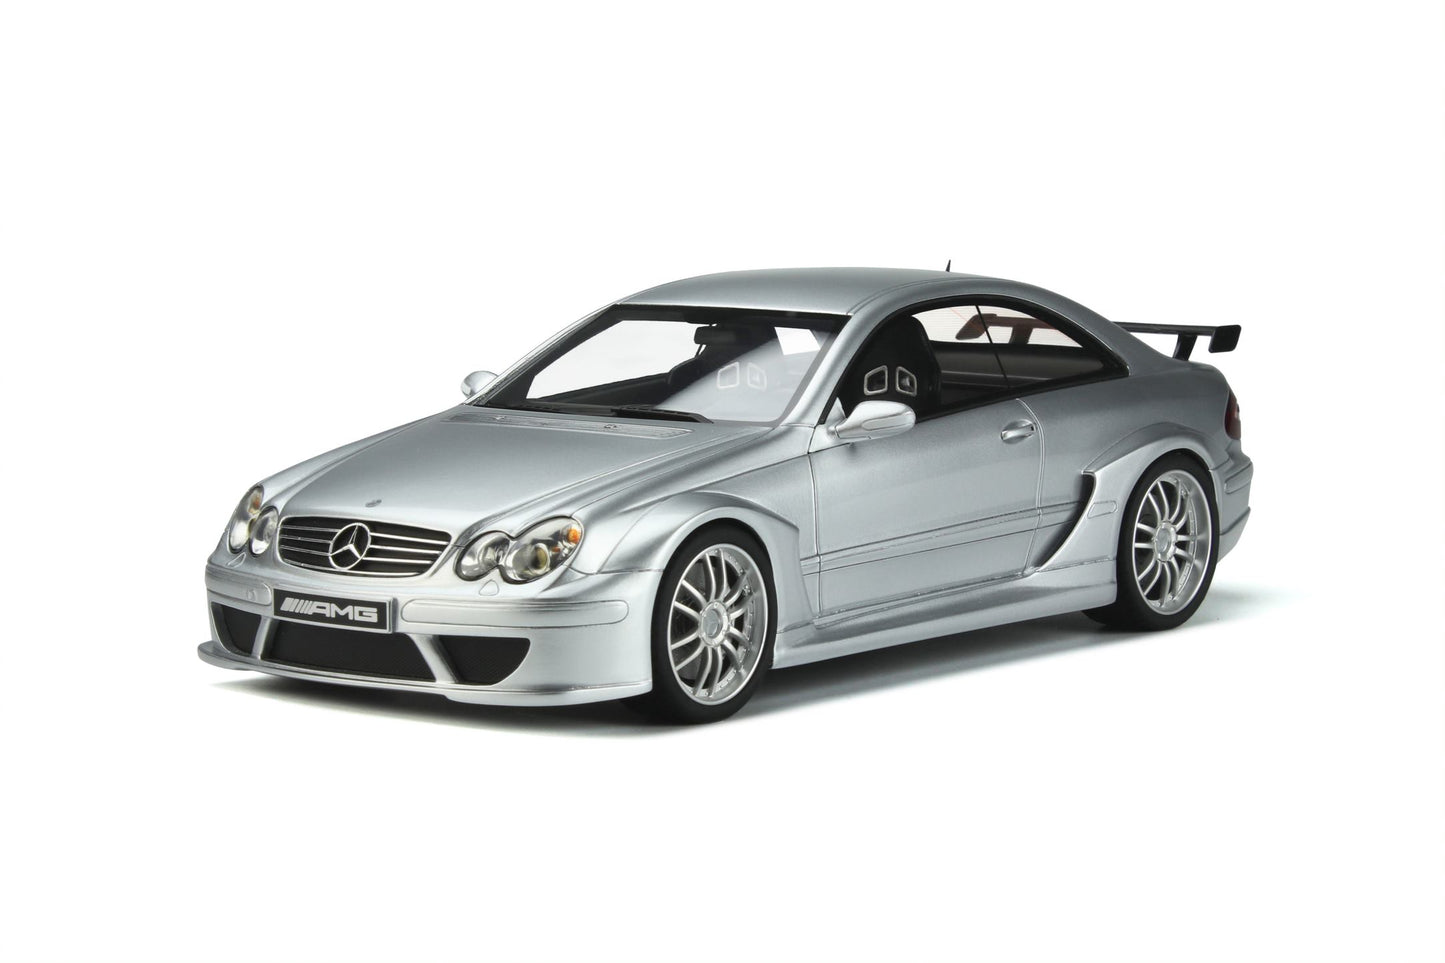 1:18 Mercedes-Benz CLK DTM, C209, 2004, sølvmetallic, Ottomobile, OT895, lukket model, limited 2.500 stk.